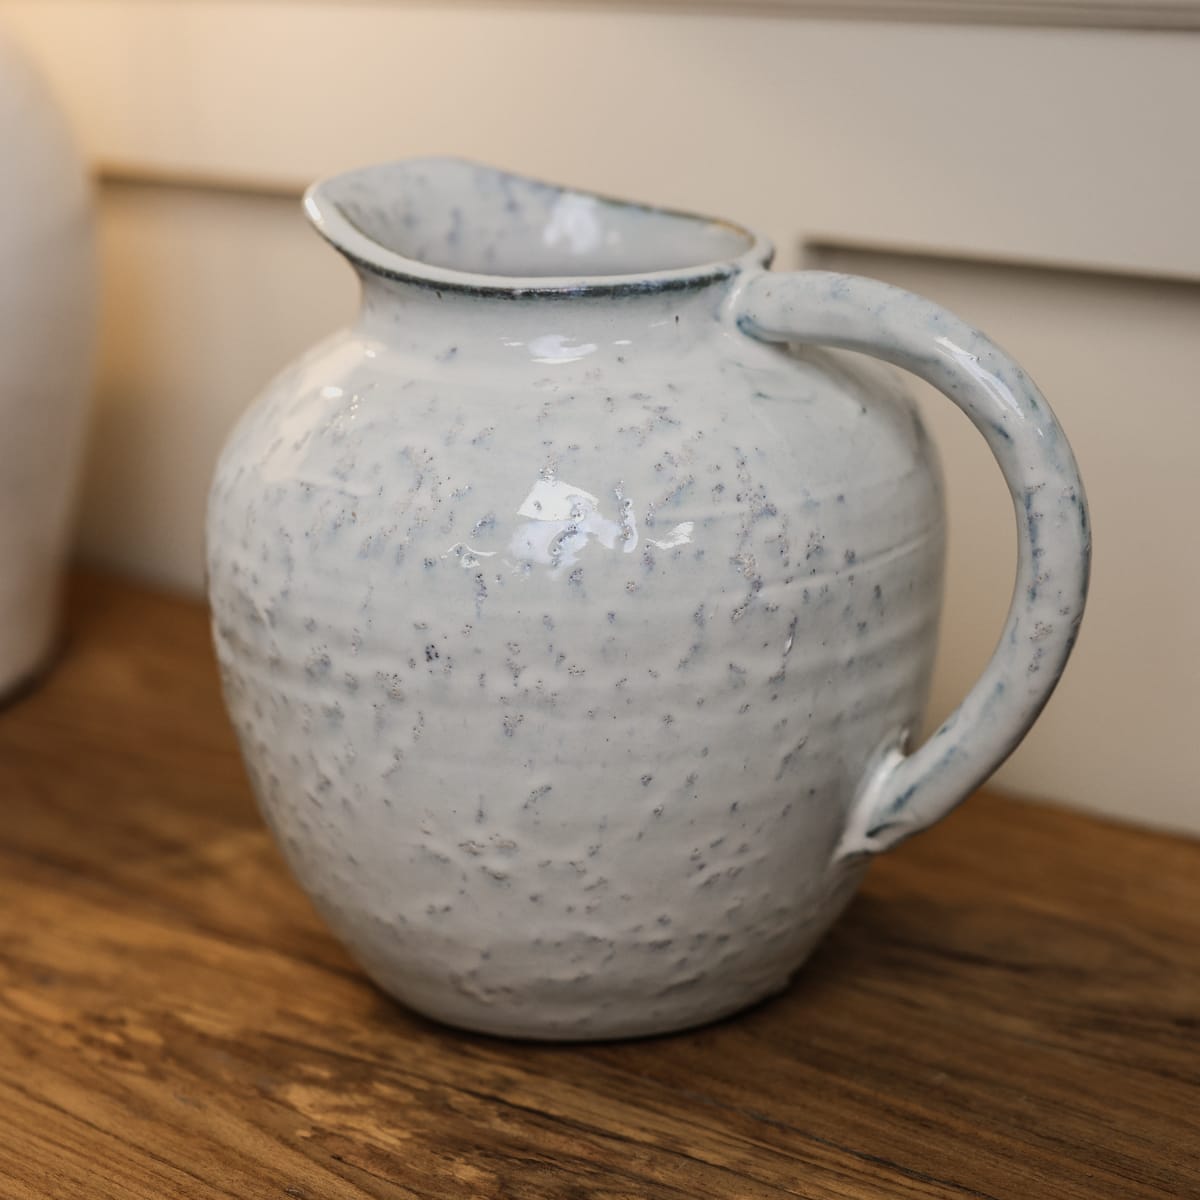 Small ceramic jug with blue speckled glaze.